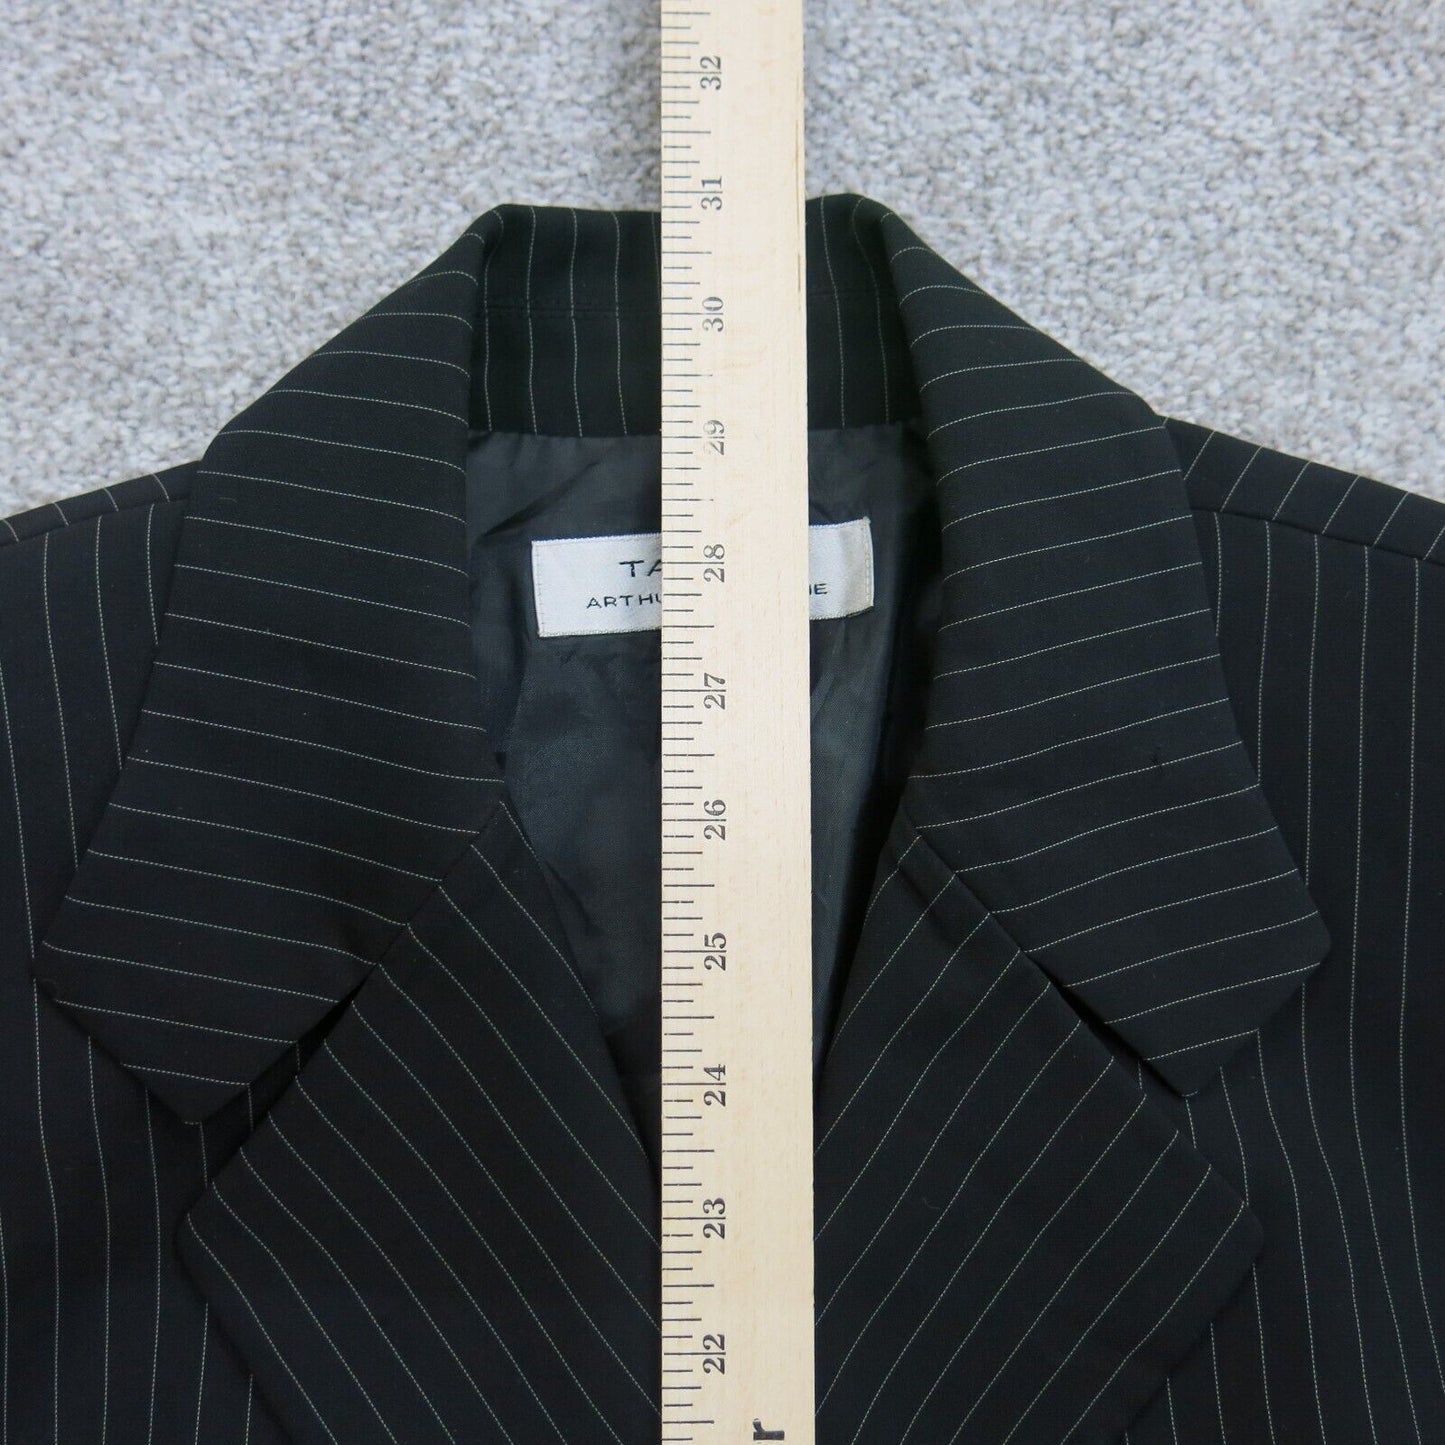 Tahari Men Striped Blazer Coat Jacket Front Button Long Sleeve Pockets Black 14W